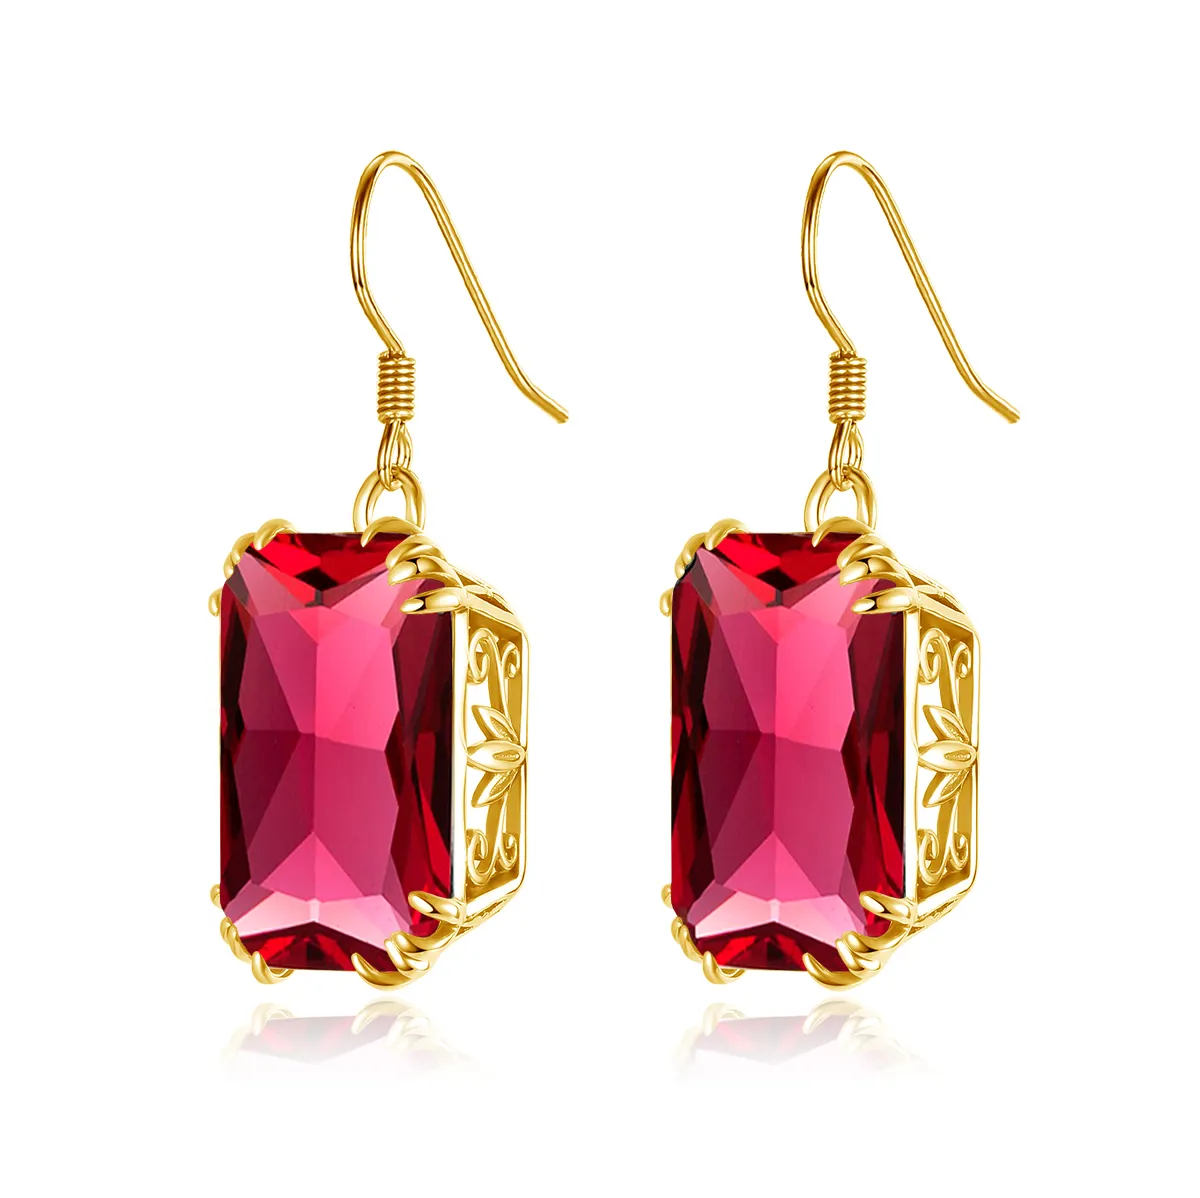 Hypoallergenic Jewelry Wholesale 18k Gold Color Flower Earrings Red Ruby Square Gemstone 925 Sterling Silver Women Earrings